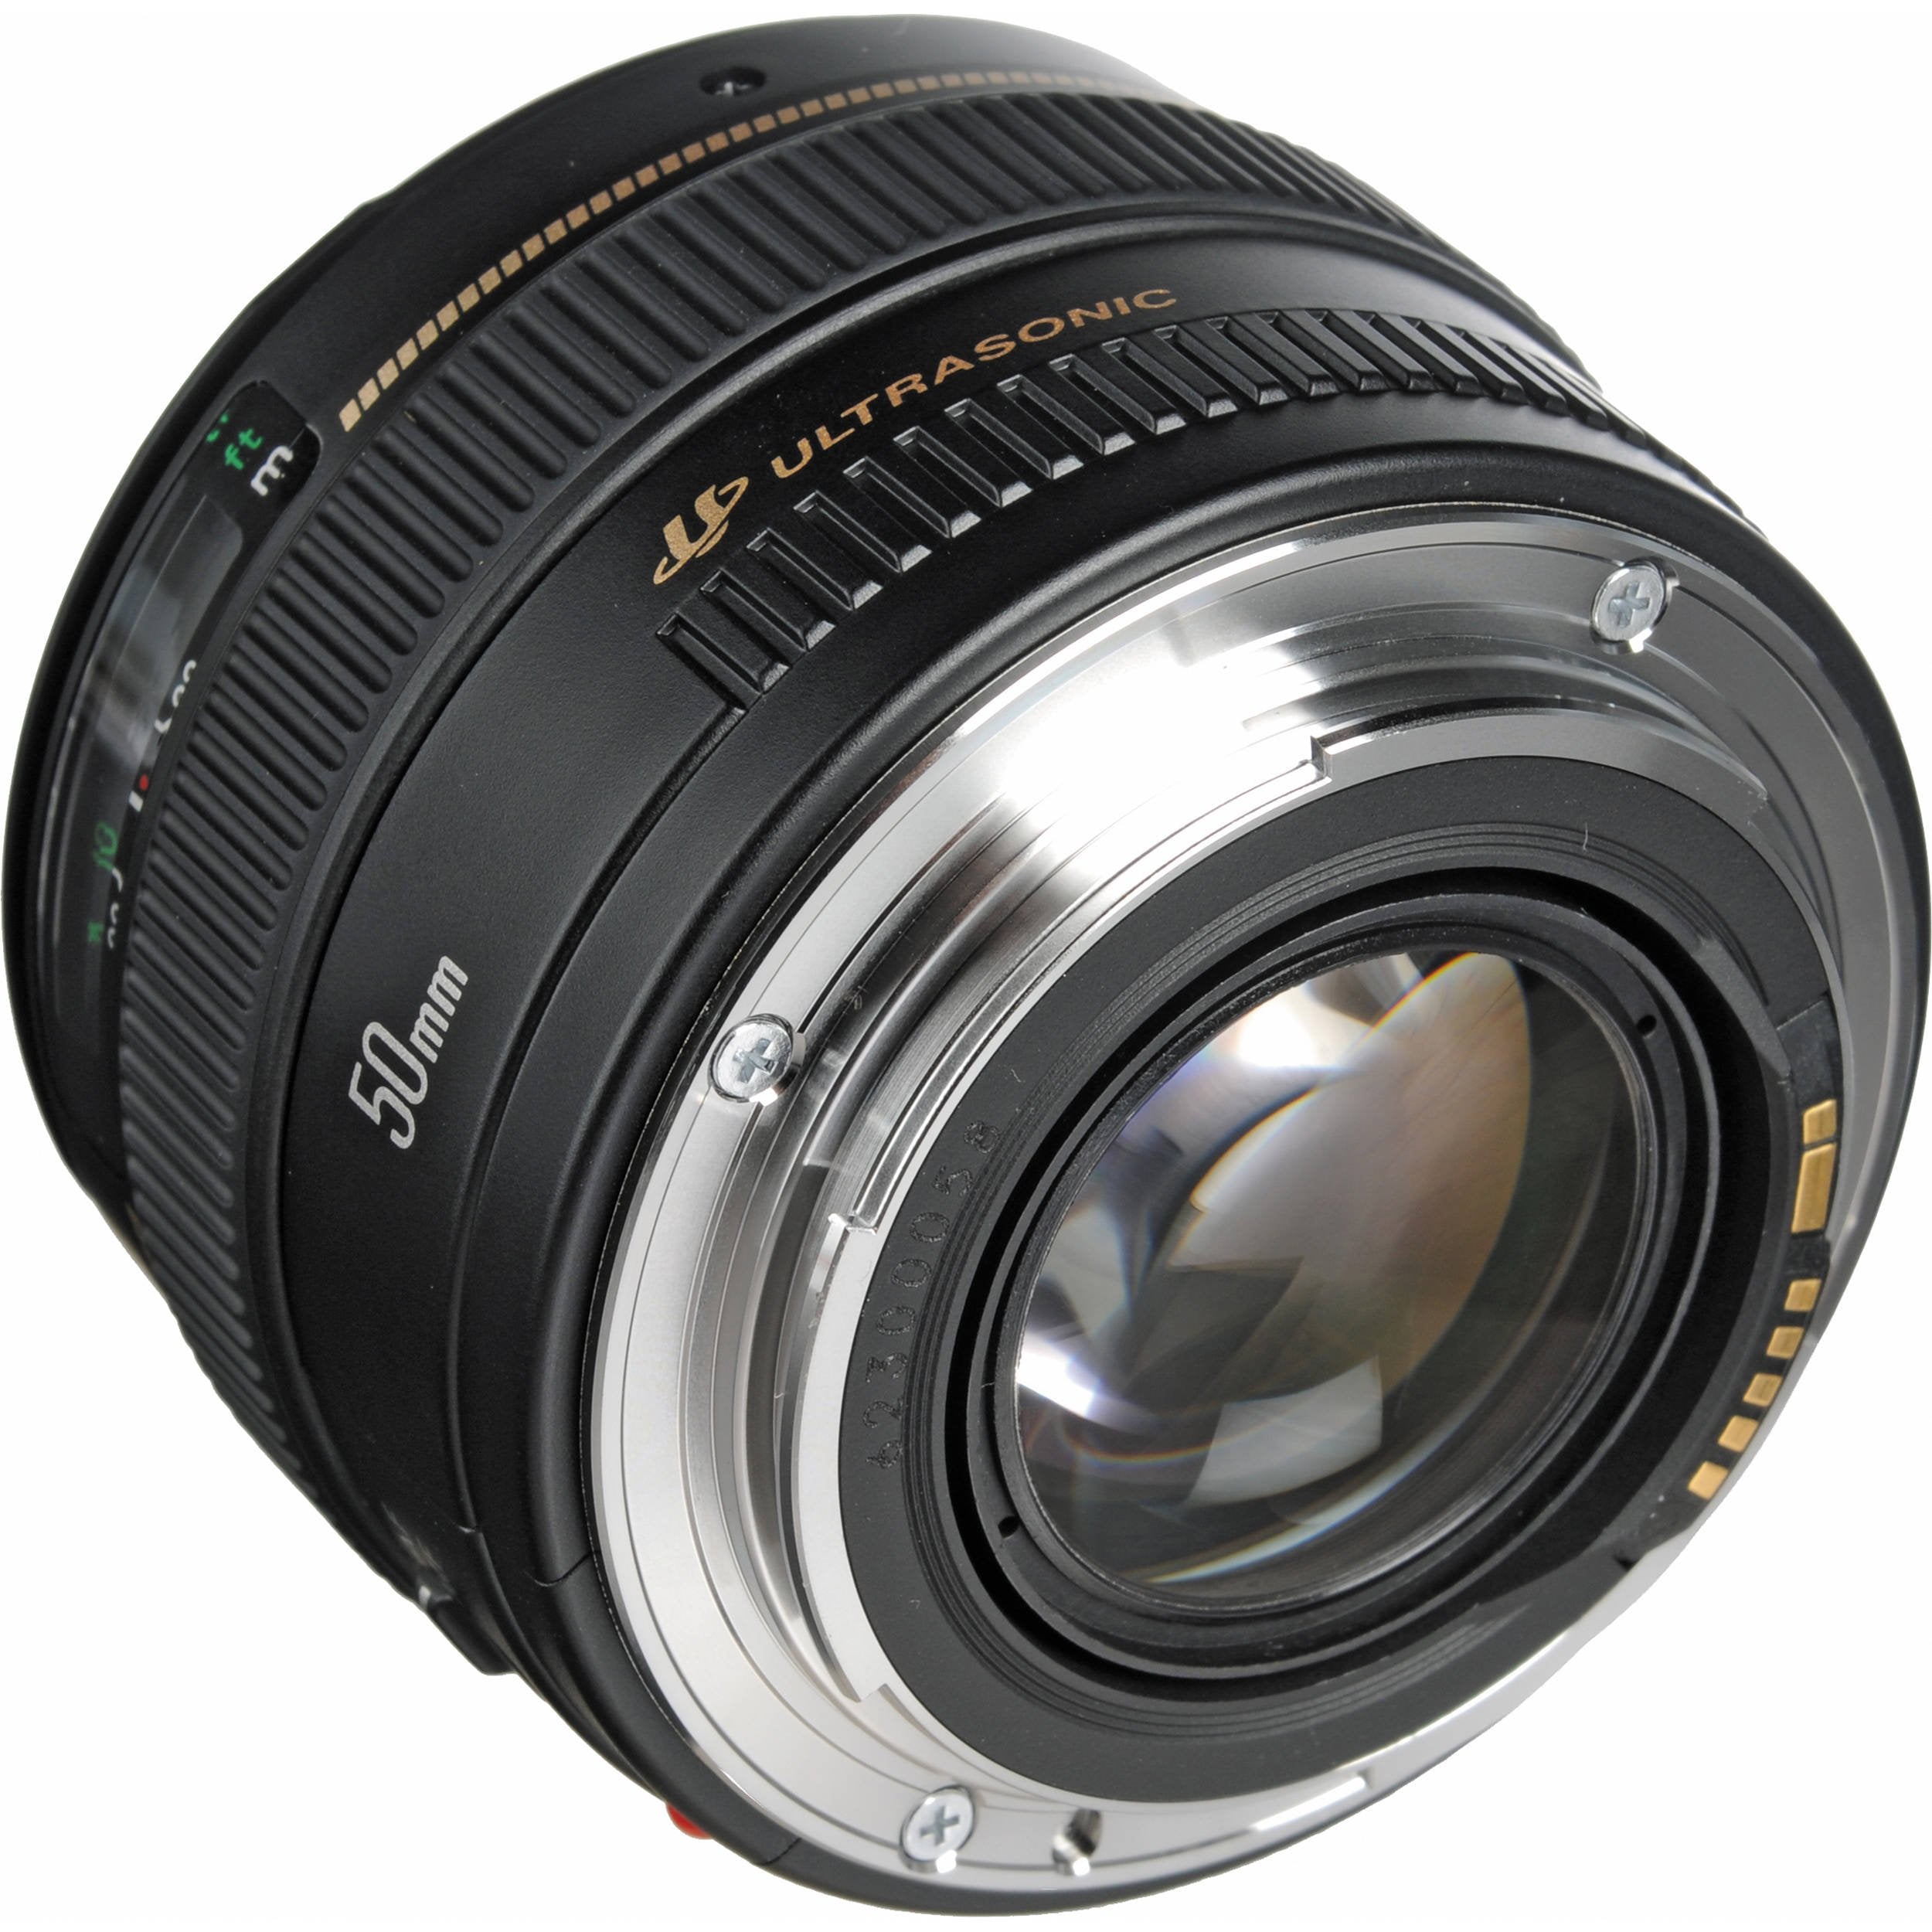 Canon EF 50 1.4 USM 58MM Lens + 4.5 inch Vivitar Premium Lens Case + Cleaning Kit